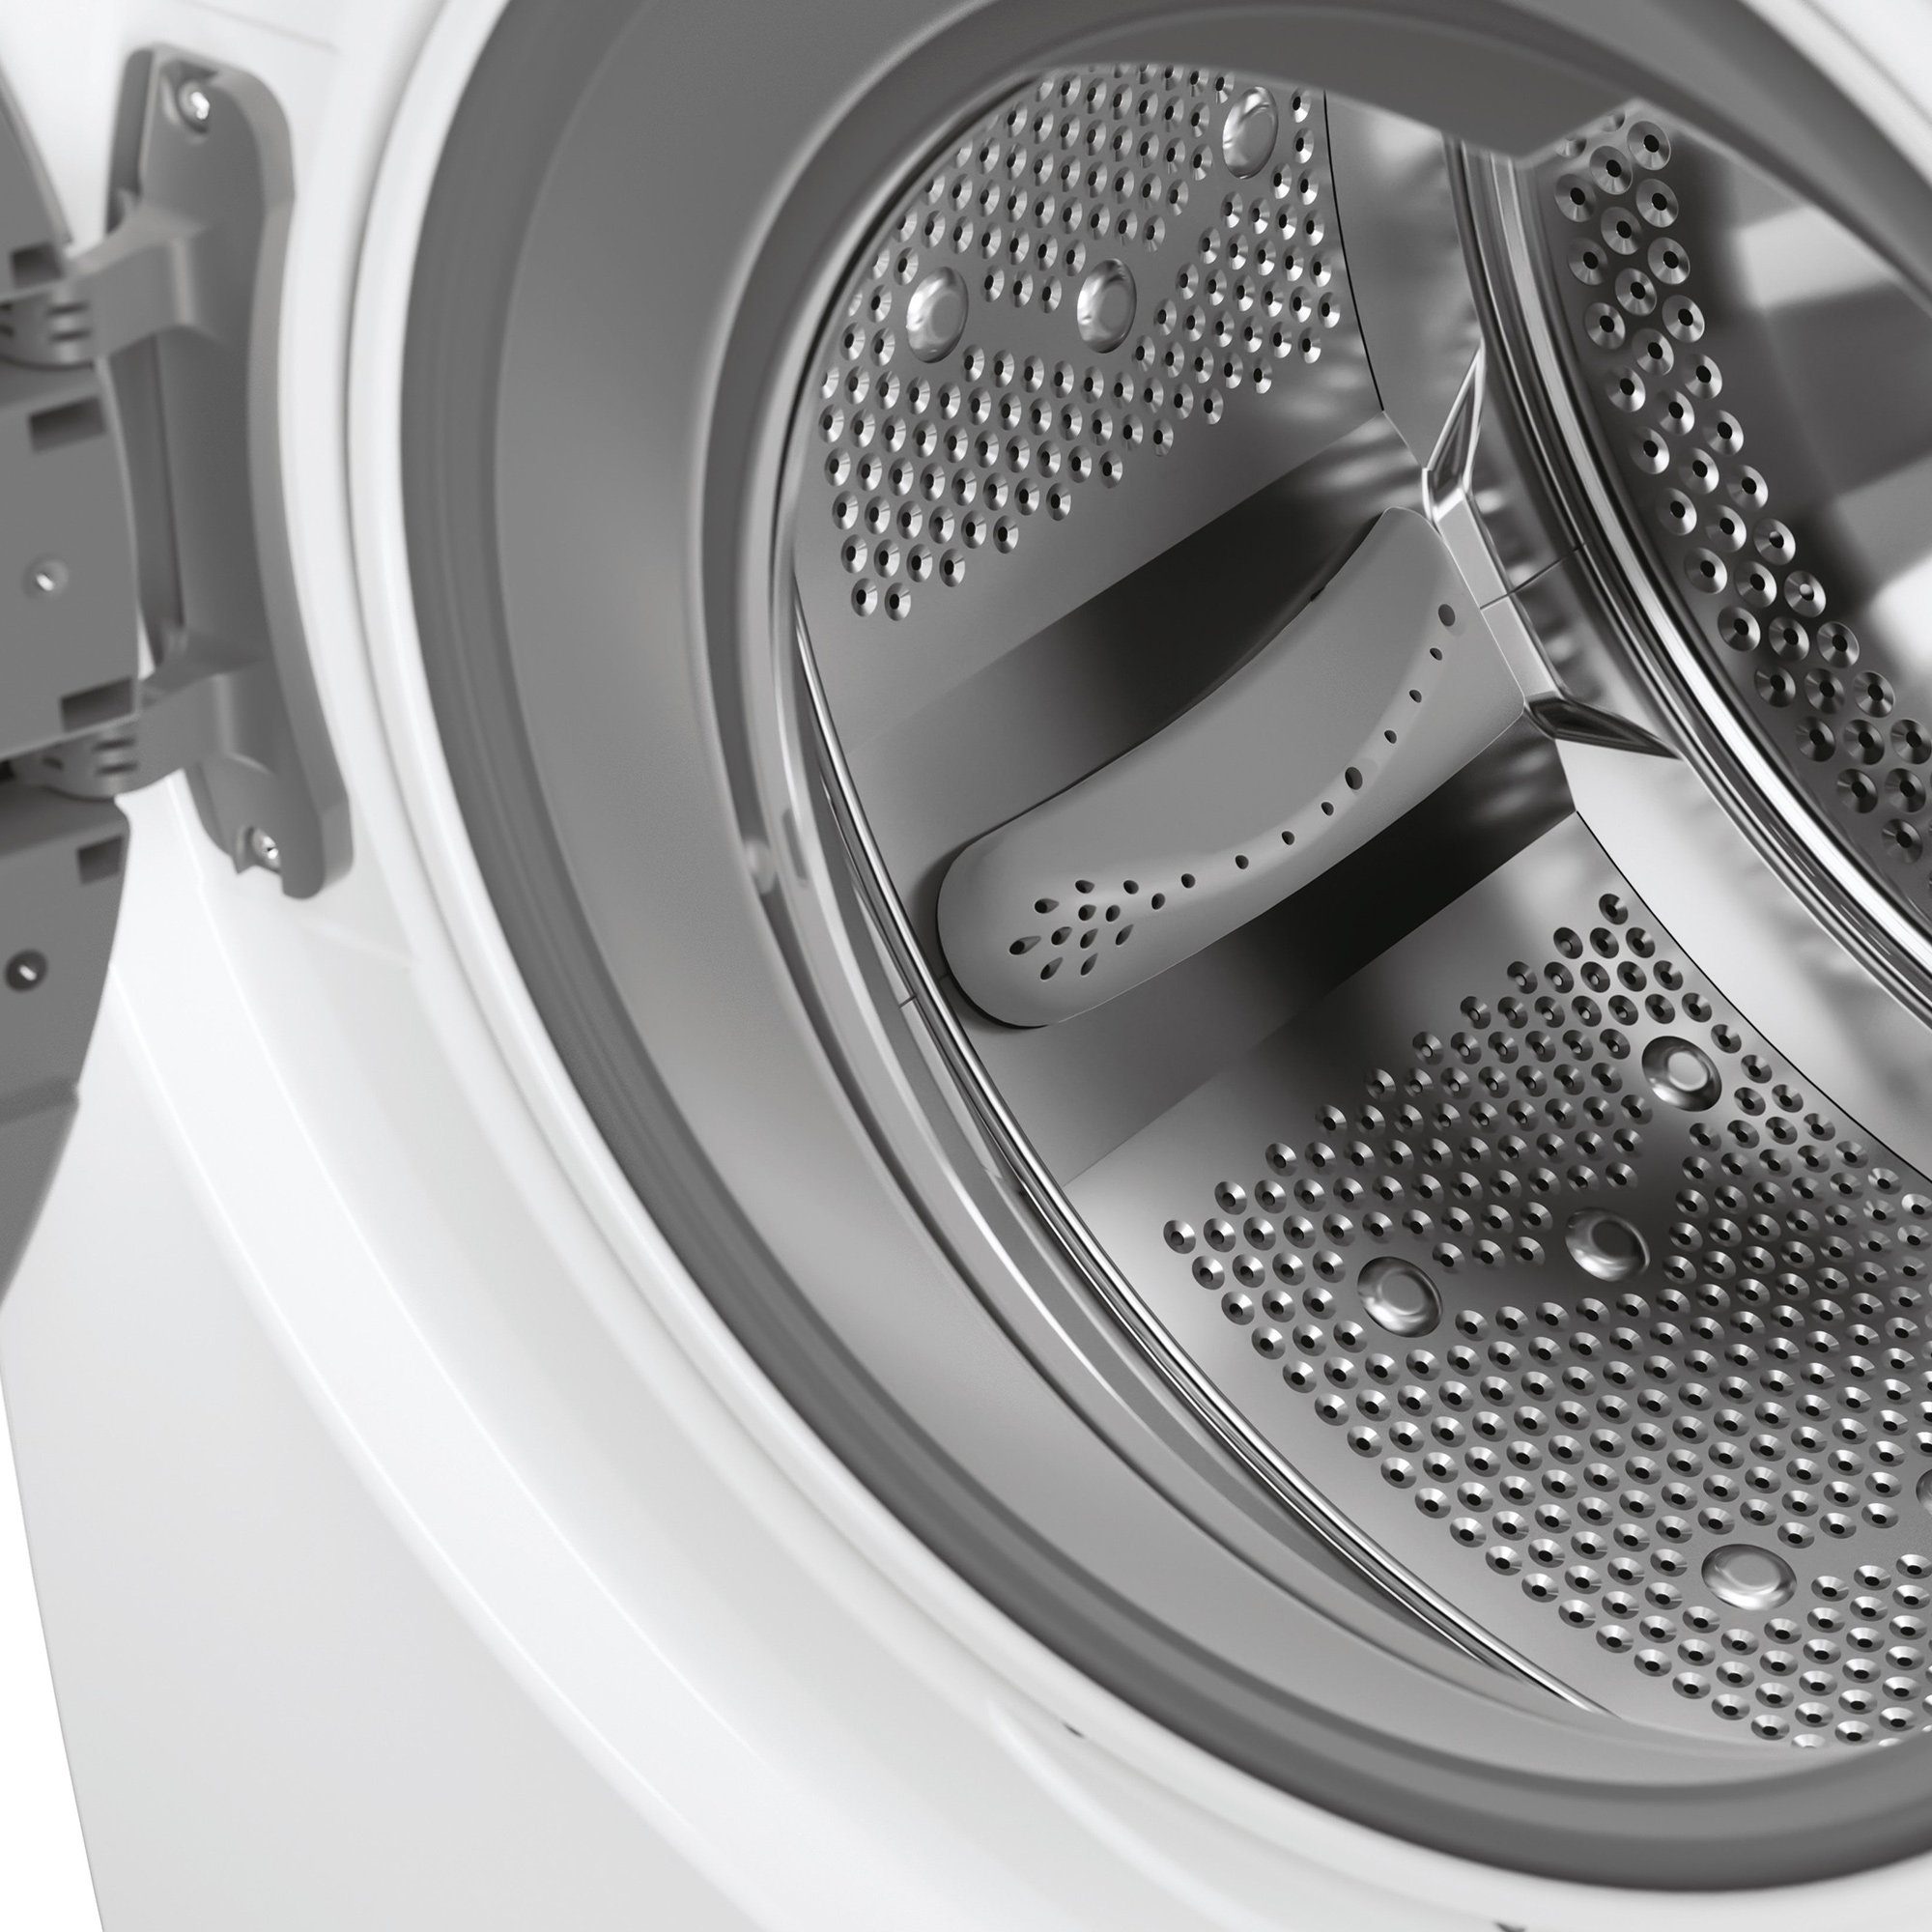 Hoover Waschmaschine H-WASH 550 Expert App 14 / kg, Mengenautomatik hOn H5WPB69AMBC/1-S, 9 Programme, Bluetooth, 1600 Wi-Fi Design Plus + U/min